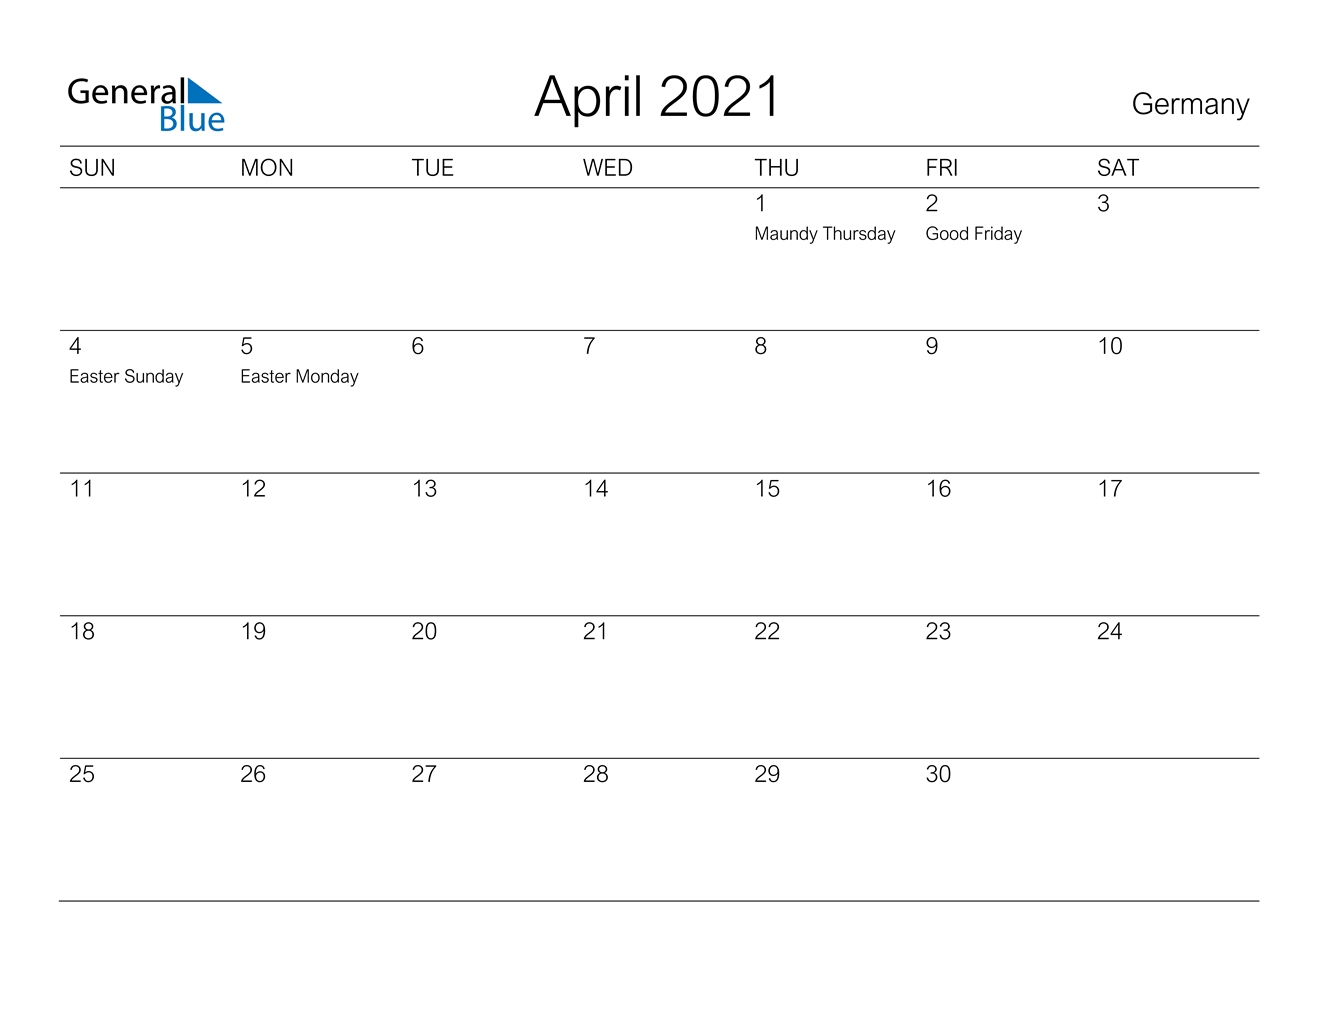 April 2021 Calendar - Germany